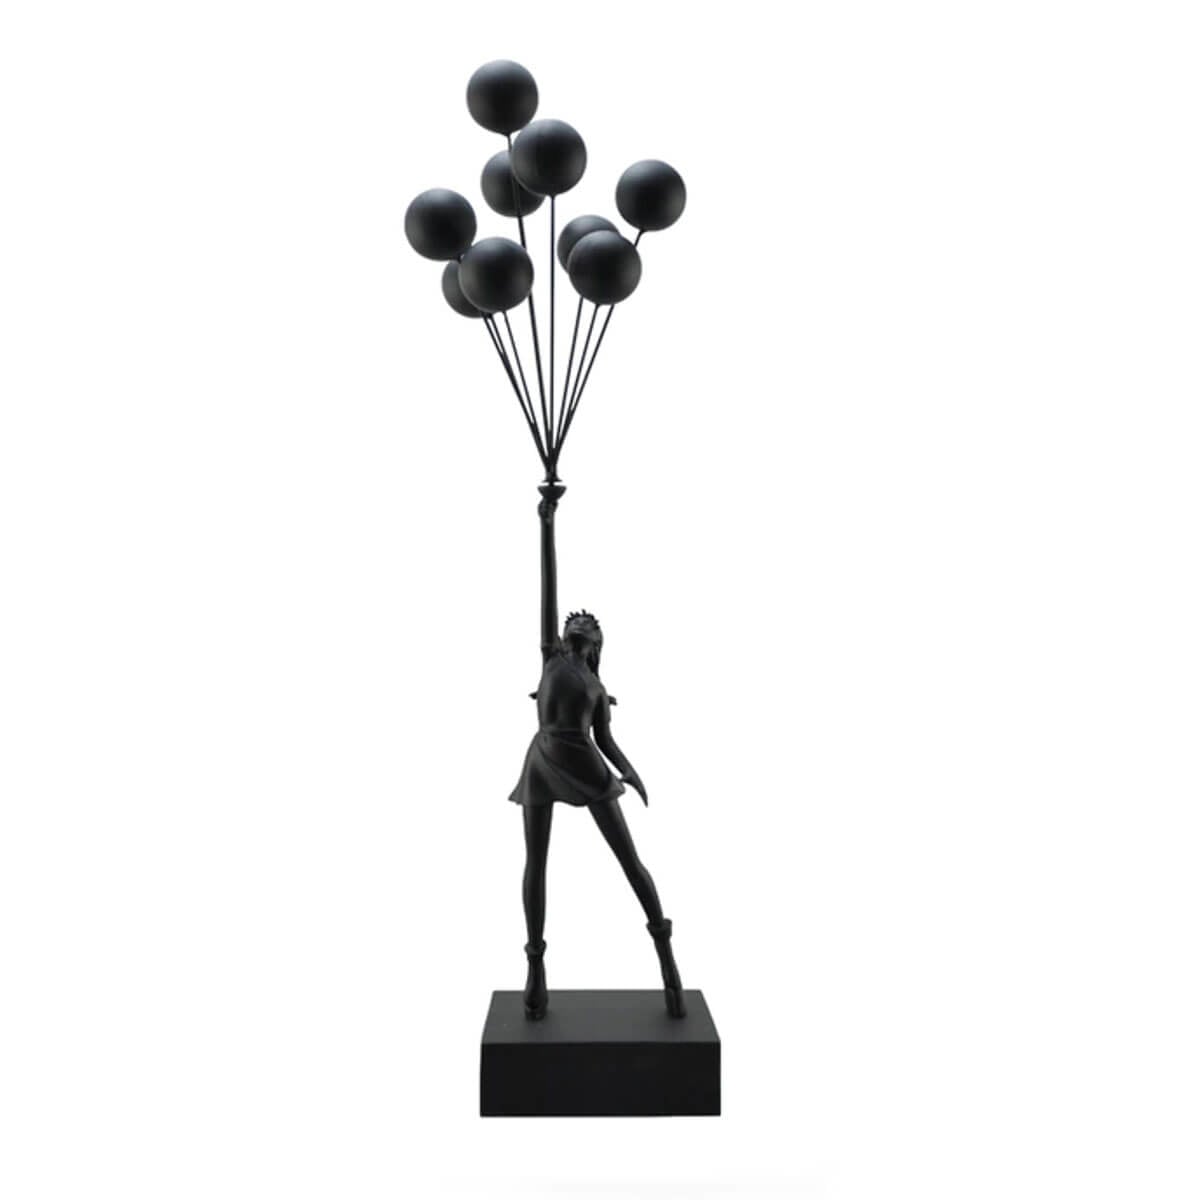 Flying Balloon Girl Banksy Sculpture - Black